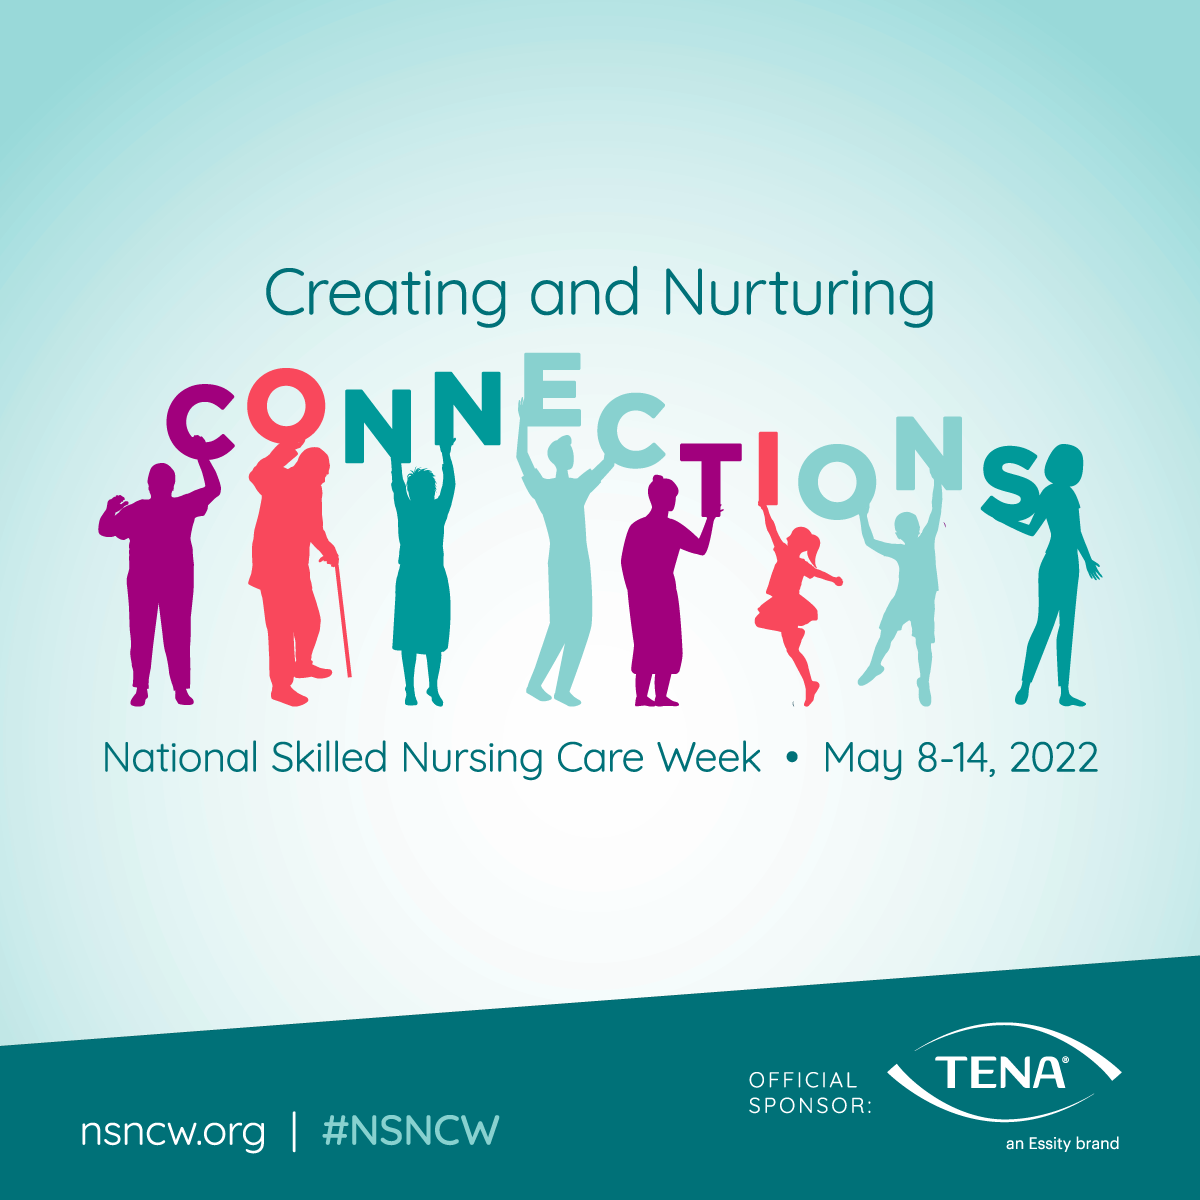 National Skilled Nursing Care Week